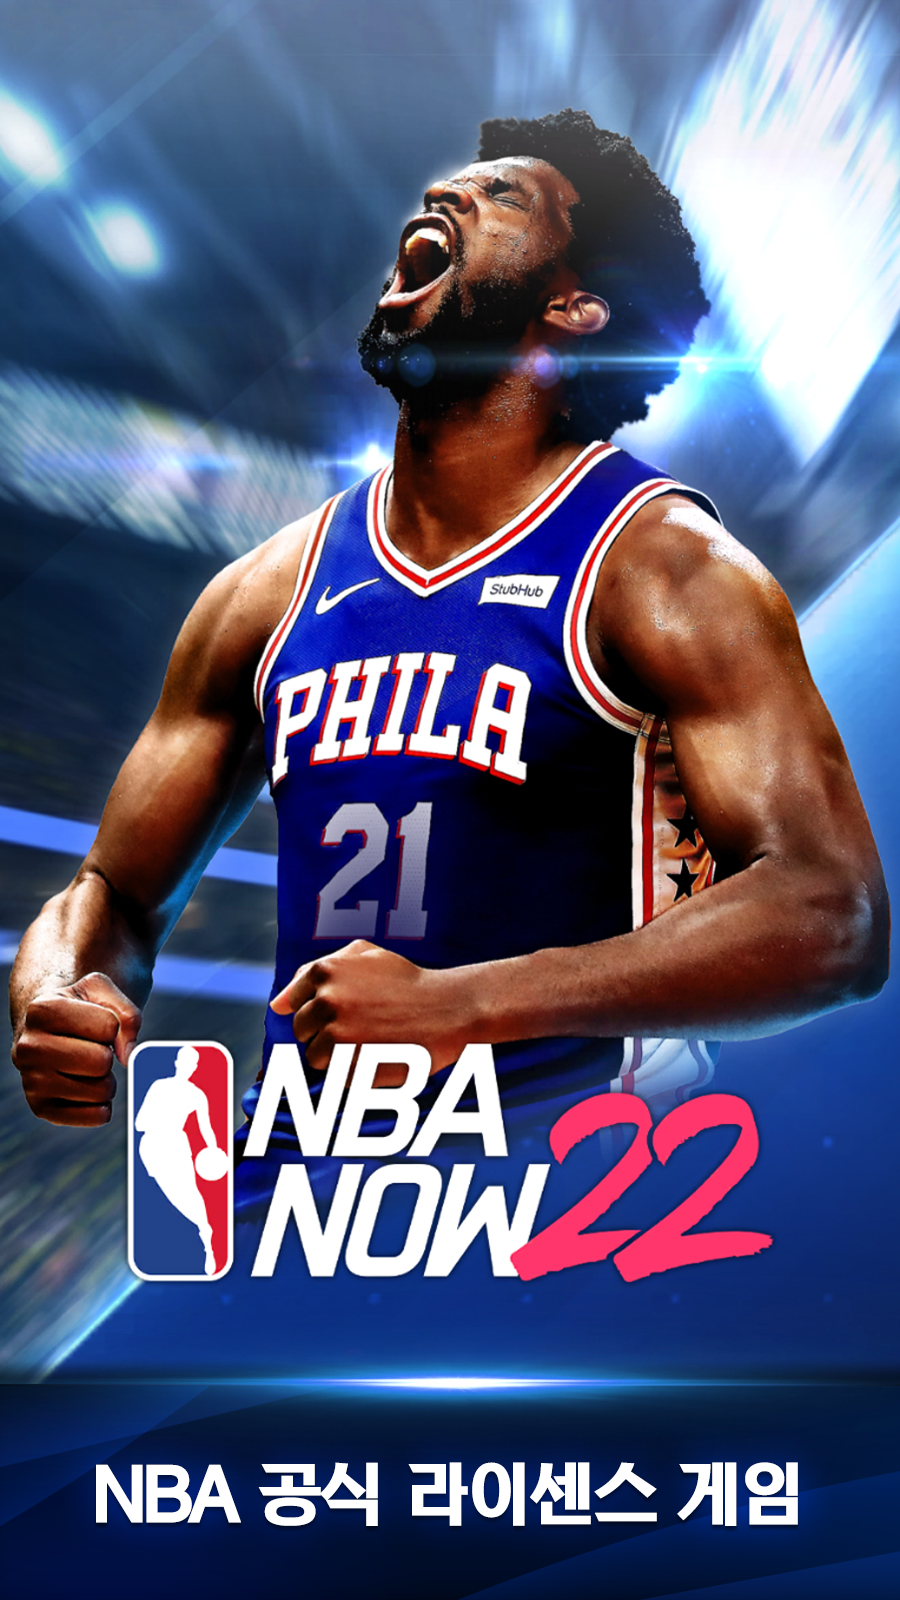 Screenshot 1 of NBA NOW 22 2.0.0